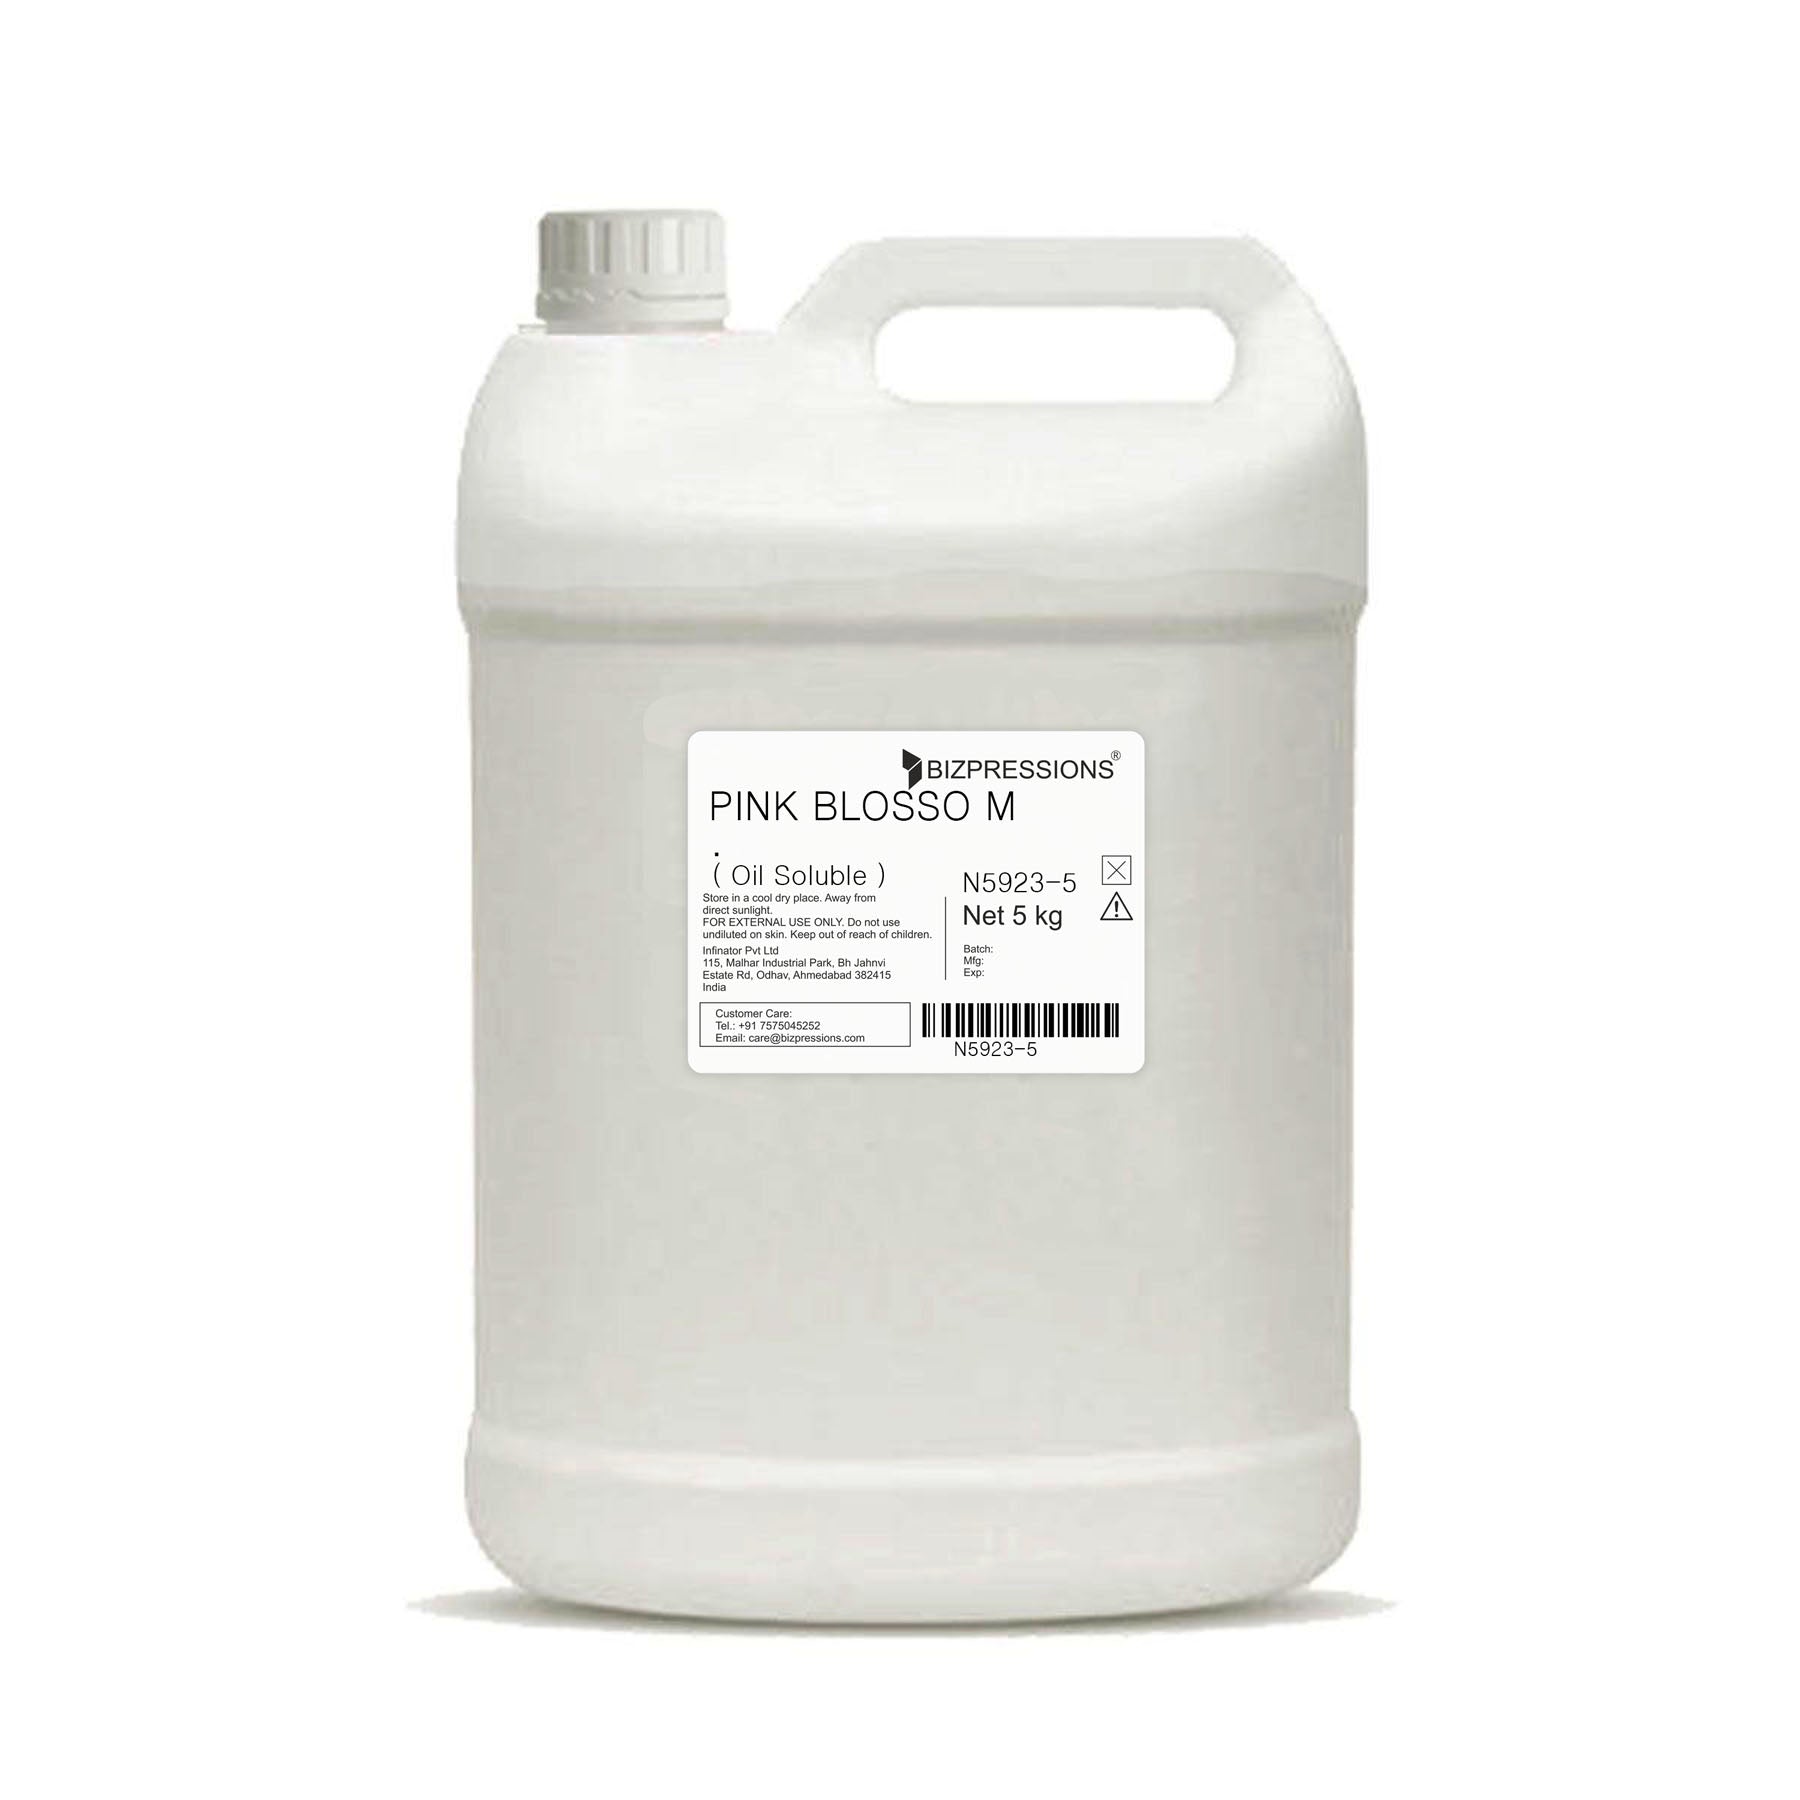 PINK BLOSSOM - Fragrance ( Oil Soluble ) - 5 kg